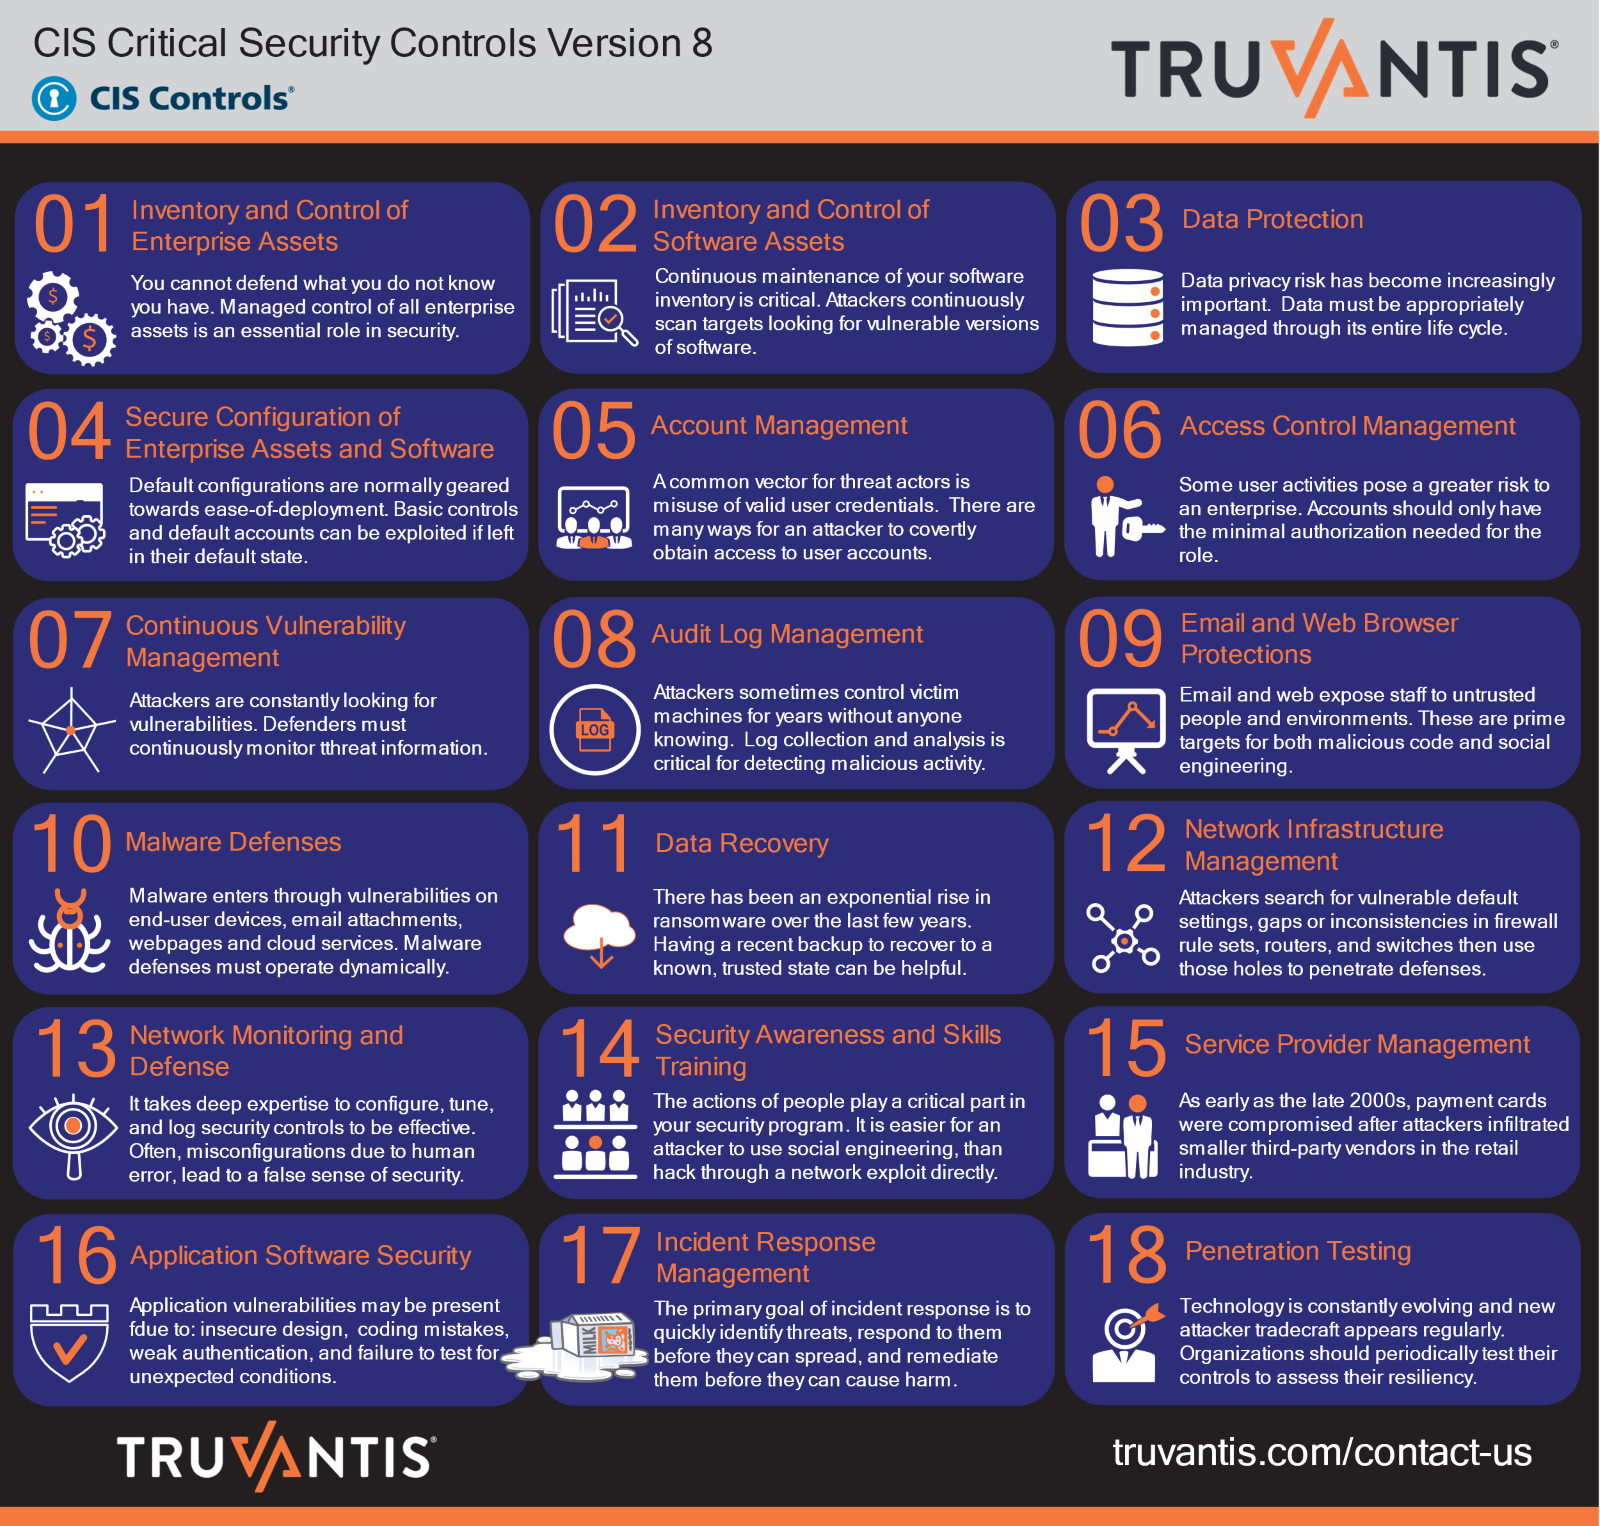 Truvantis - CIS Controls - CIS Critical Security Controls Version 8